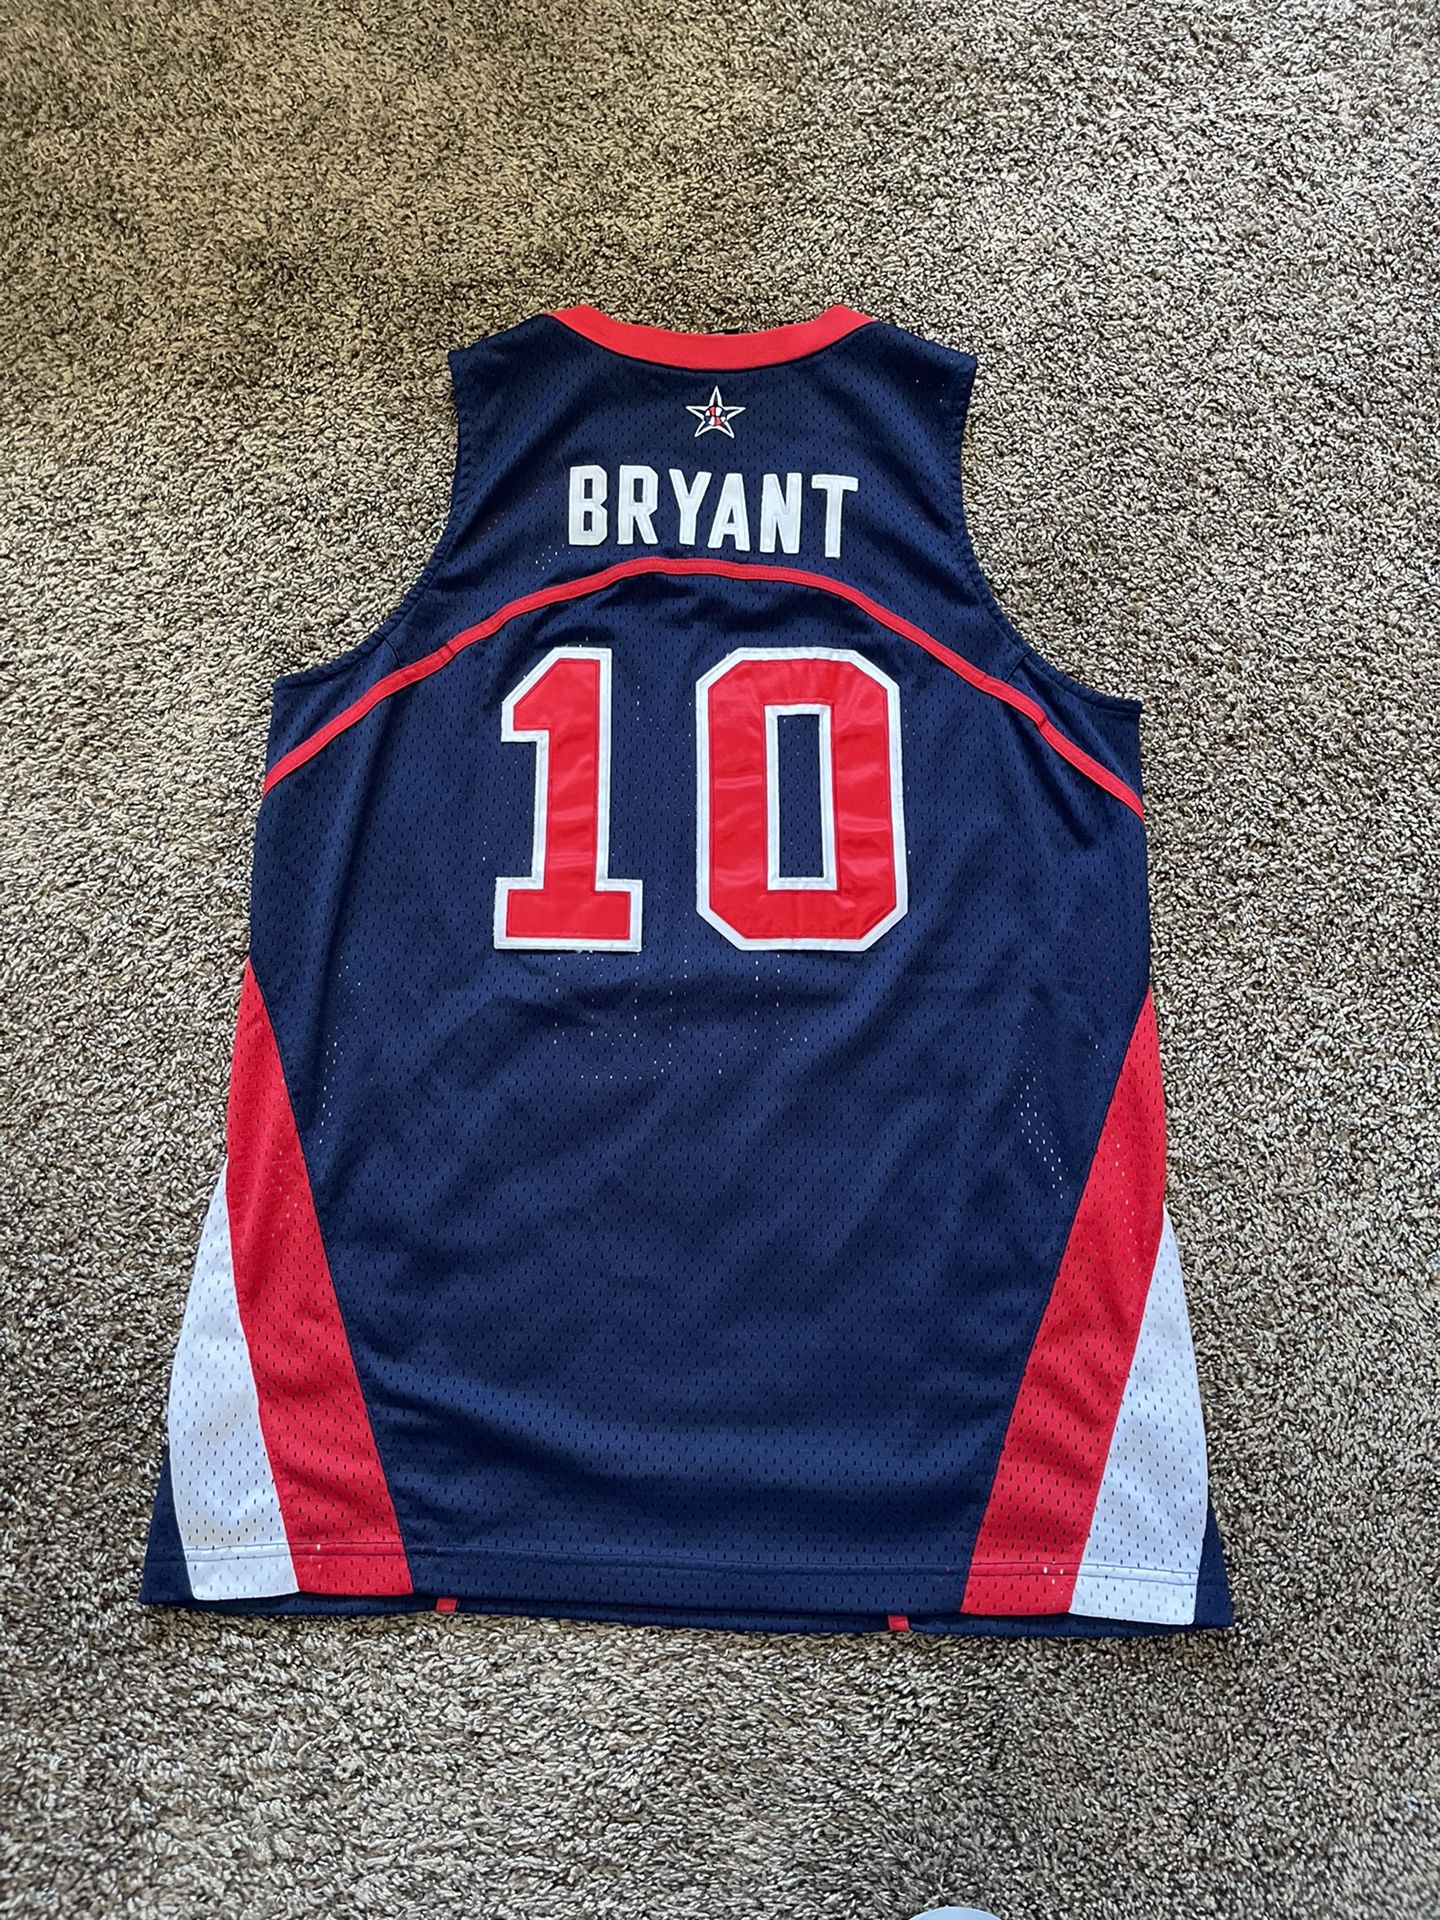 Men's Kobe Bryant #8/24 Mamba Snakeskin Jersey / XL for Sale in Port St.  Lucie, FL - OfferUp